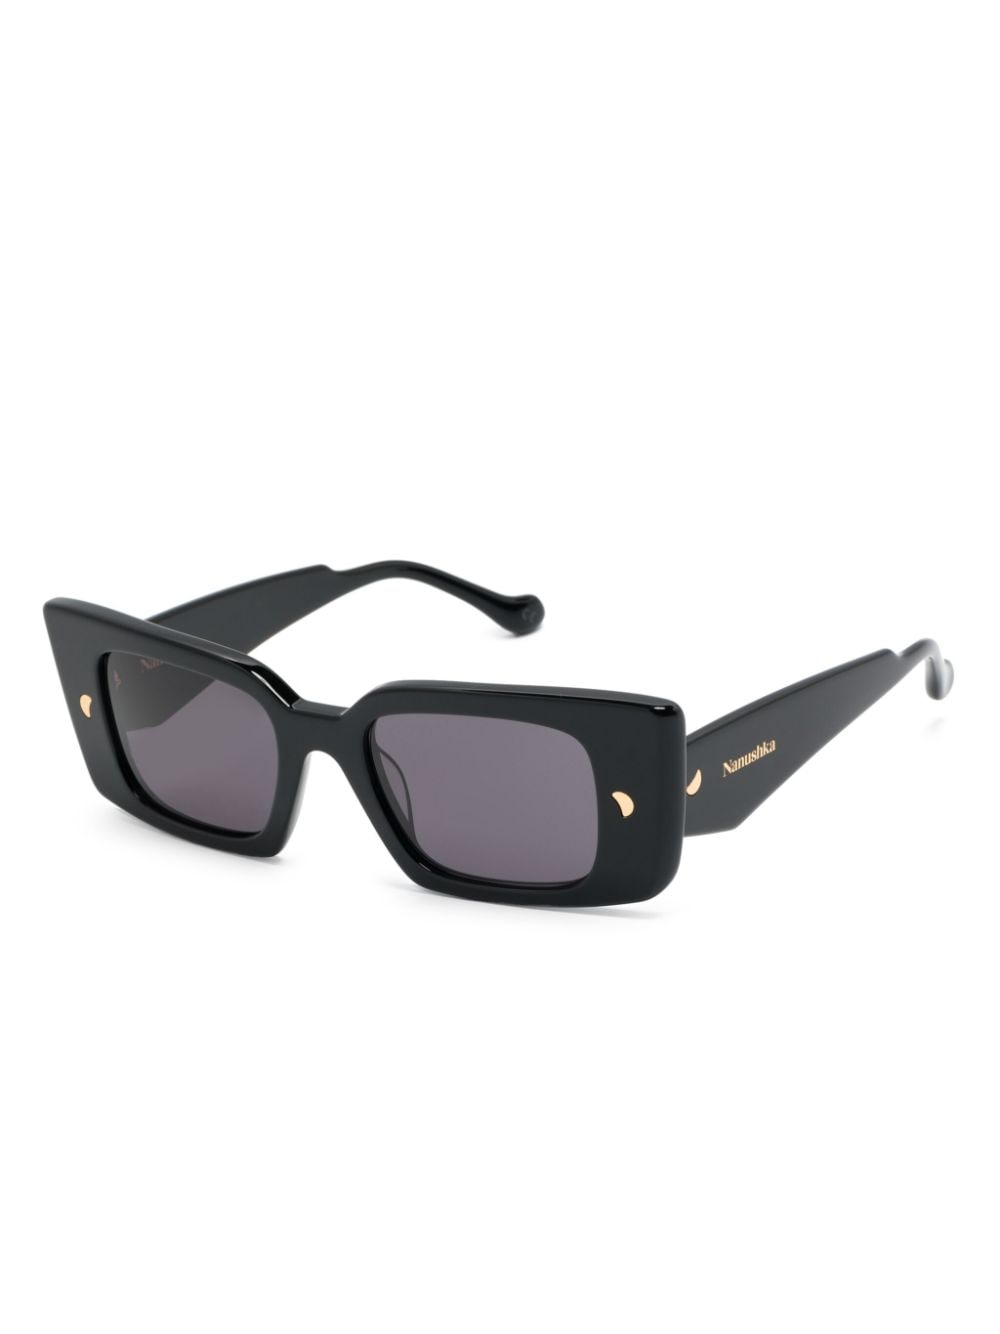 Nanushka Carmel zonnebril met rechthoekig montuur - Zwart